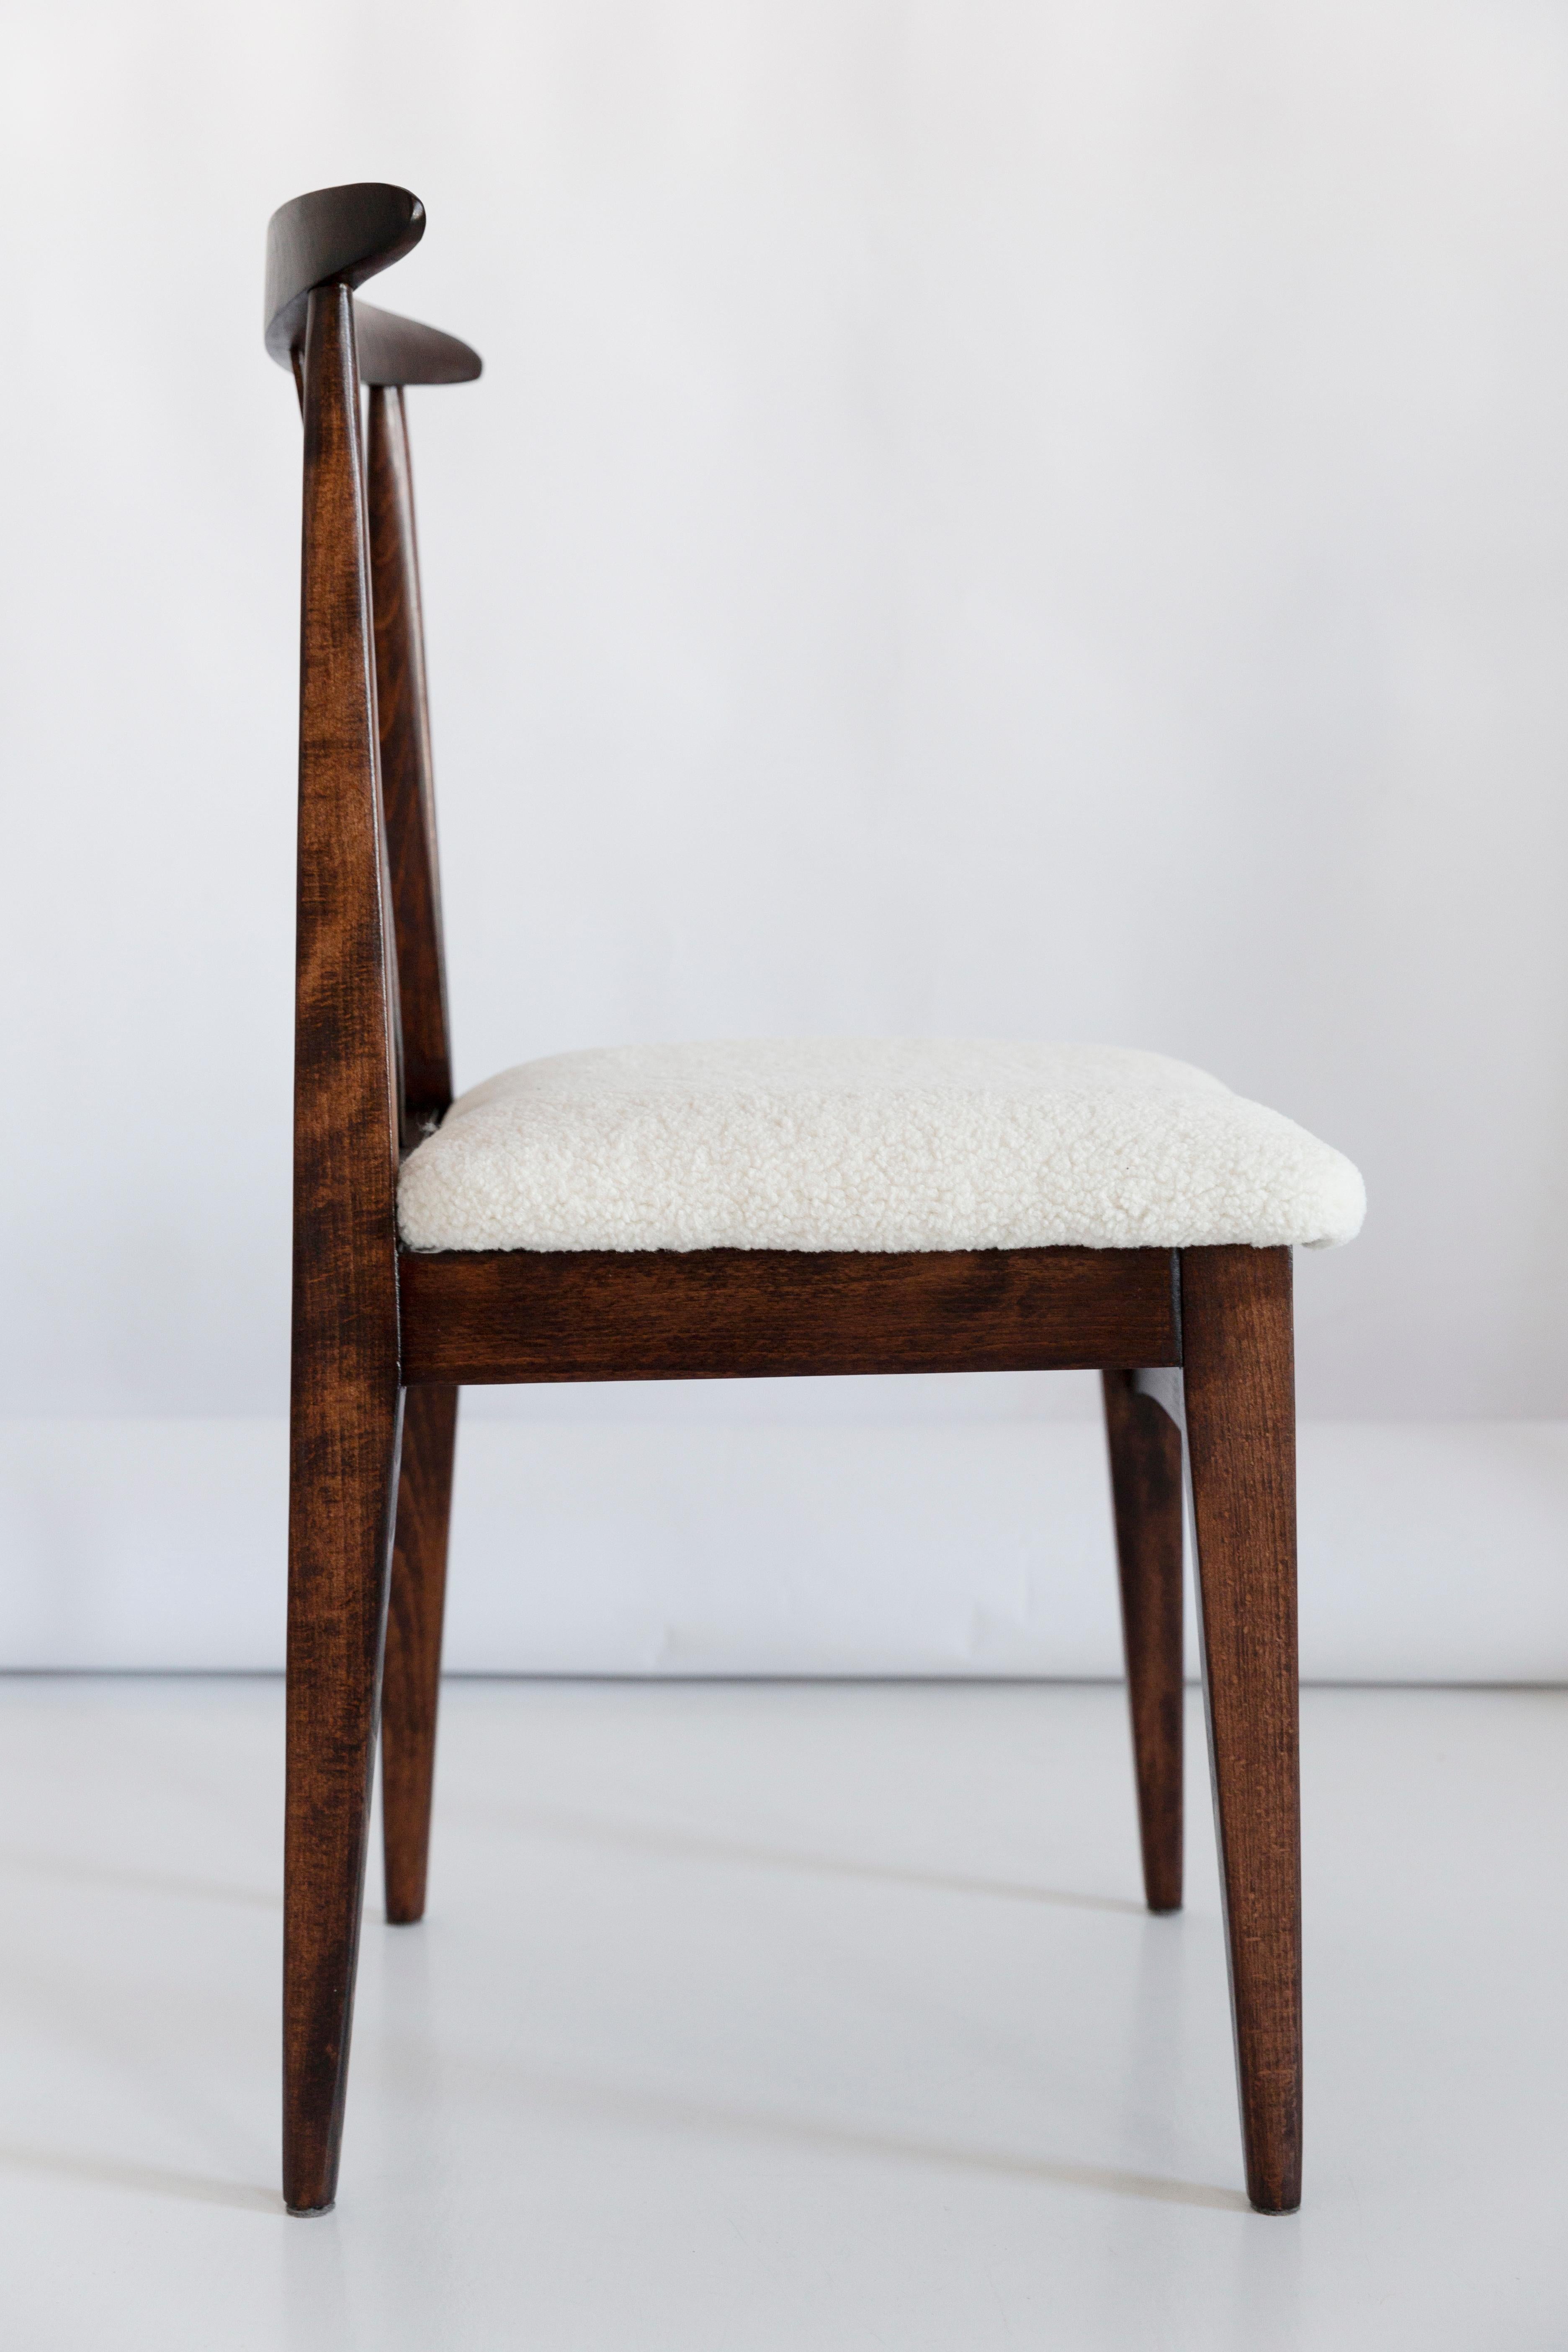 Twelve Mid-Century Light Boucle Chair, Designed by M. Zielinski, Europe, 1960s For Sale 2